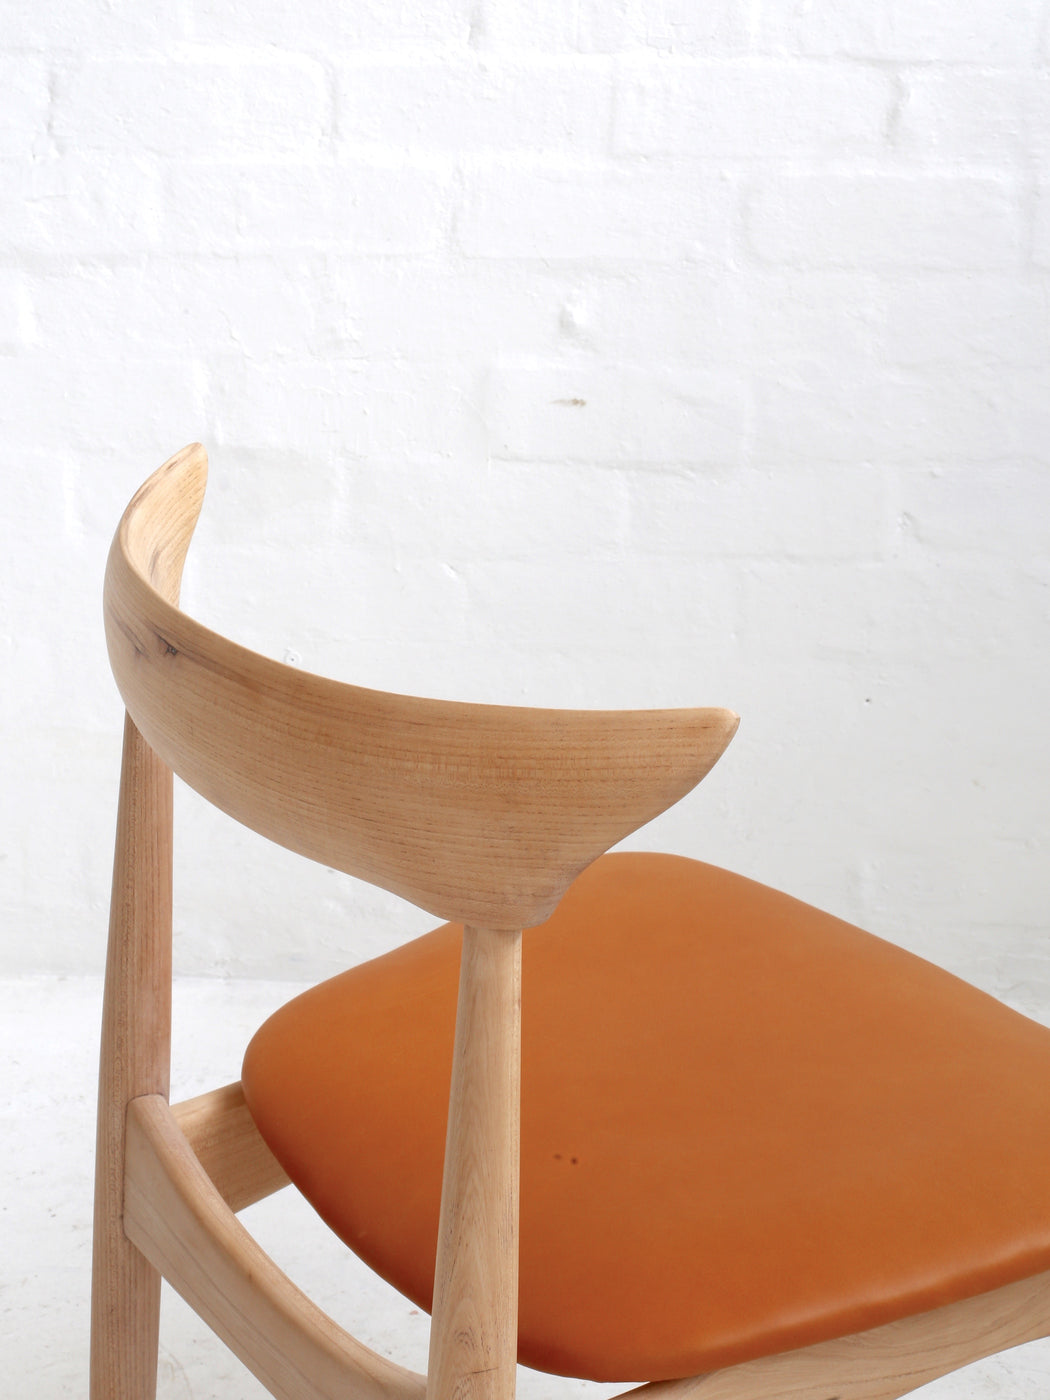 Danish Elm Chair by P.E. Jorgensen